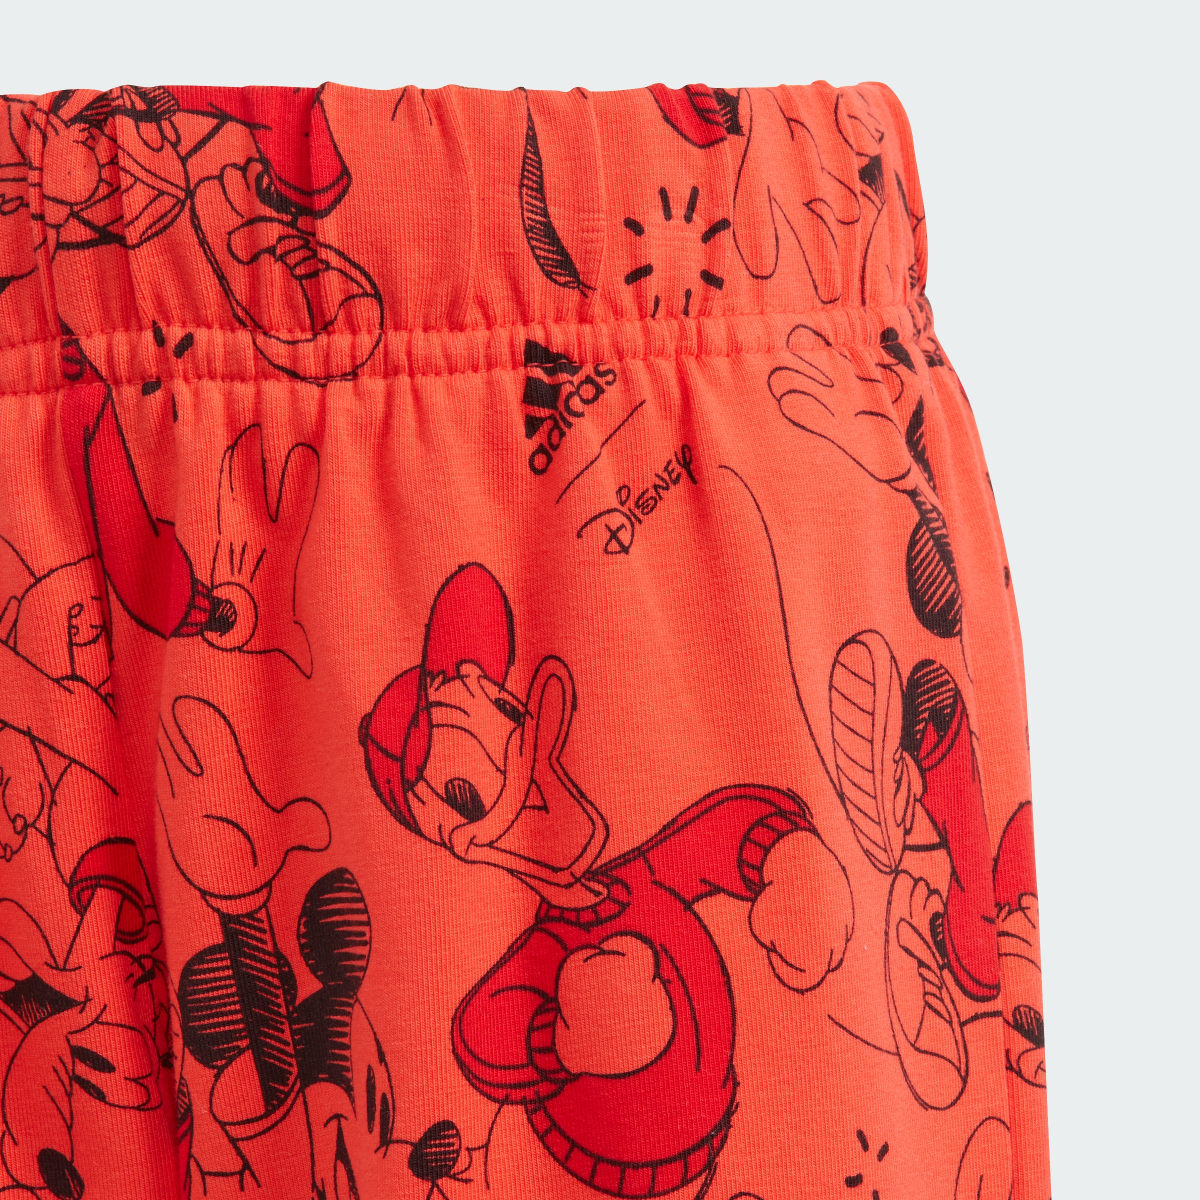 Adidas x Disney Mickey Mouse Tee Set. 9